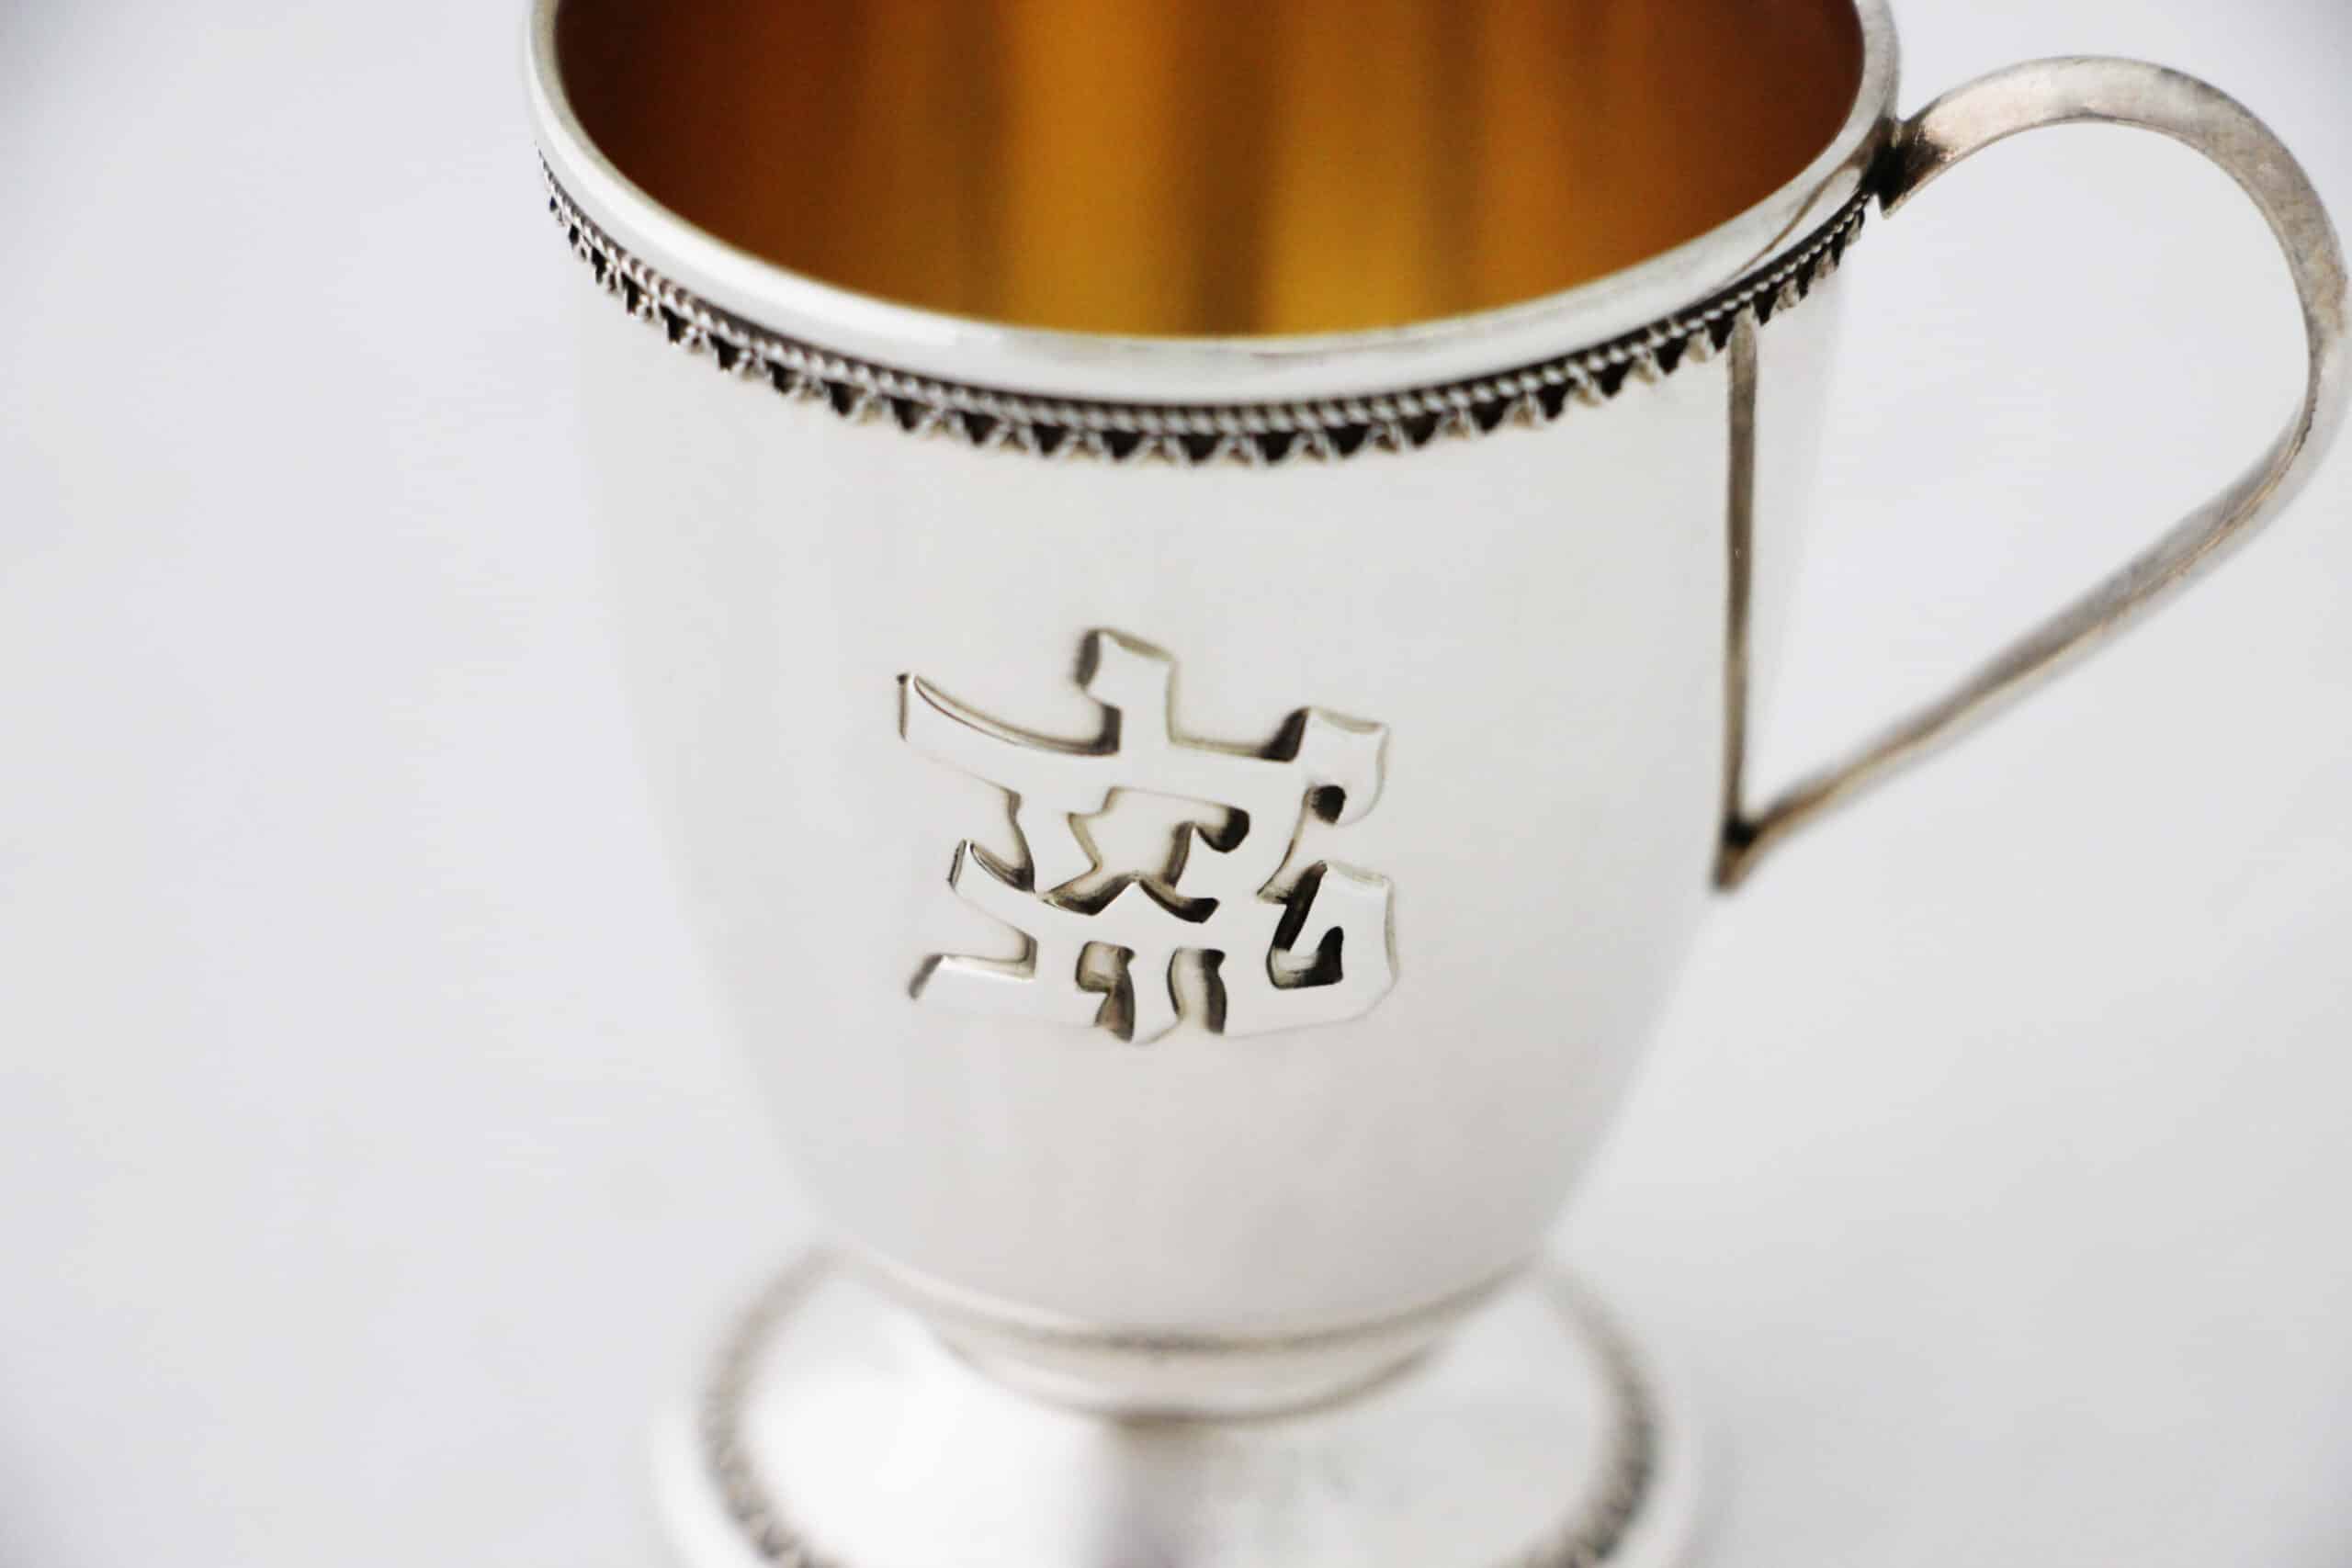 Yalda Tova Kiddush Cup Made of Sterling Silver with Filigree Rim